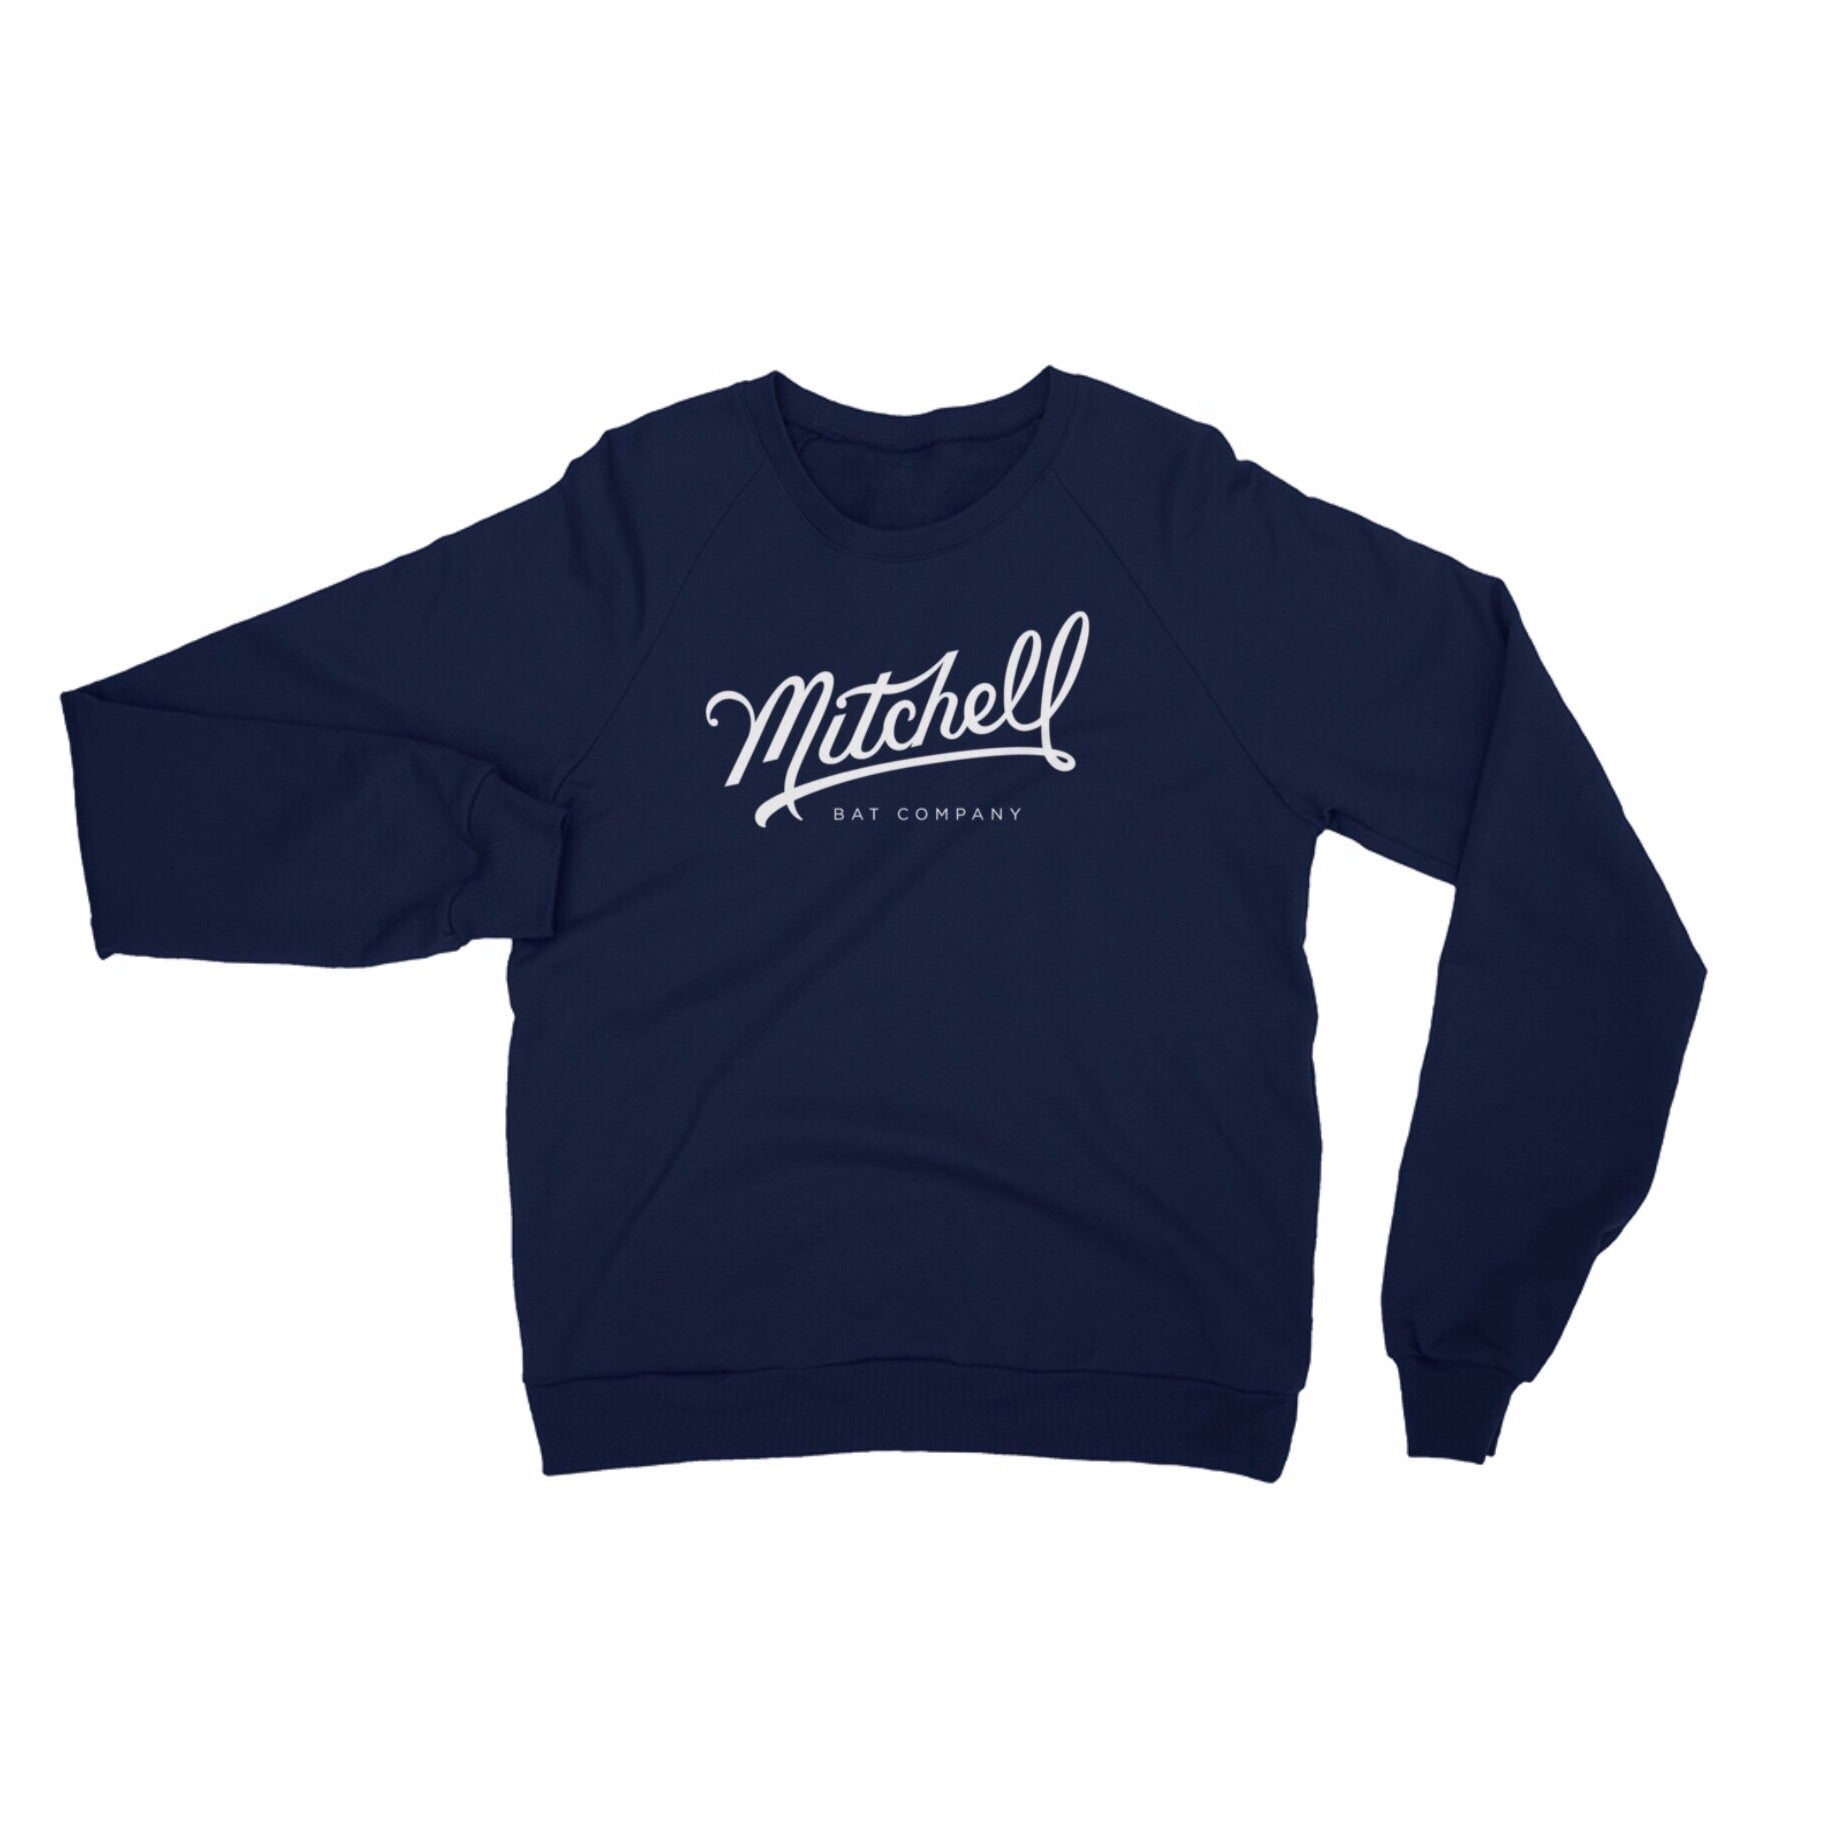 Mitchell Bat Co script logo sweatshirt